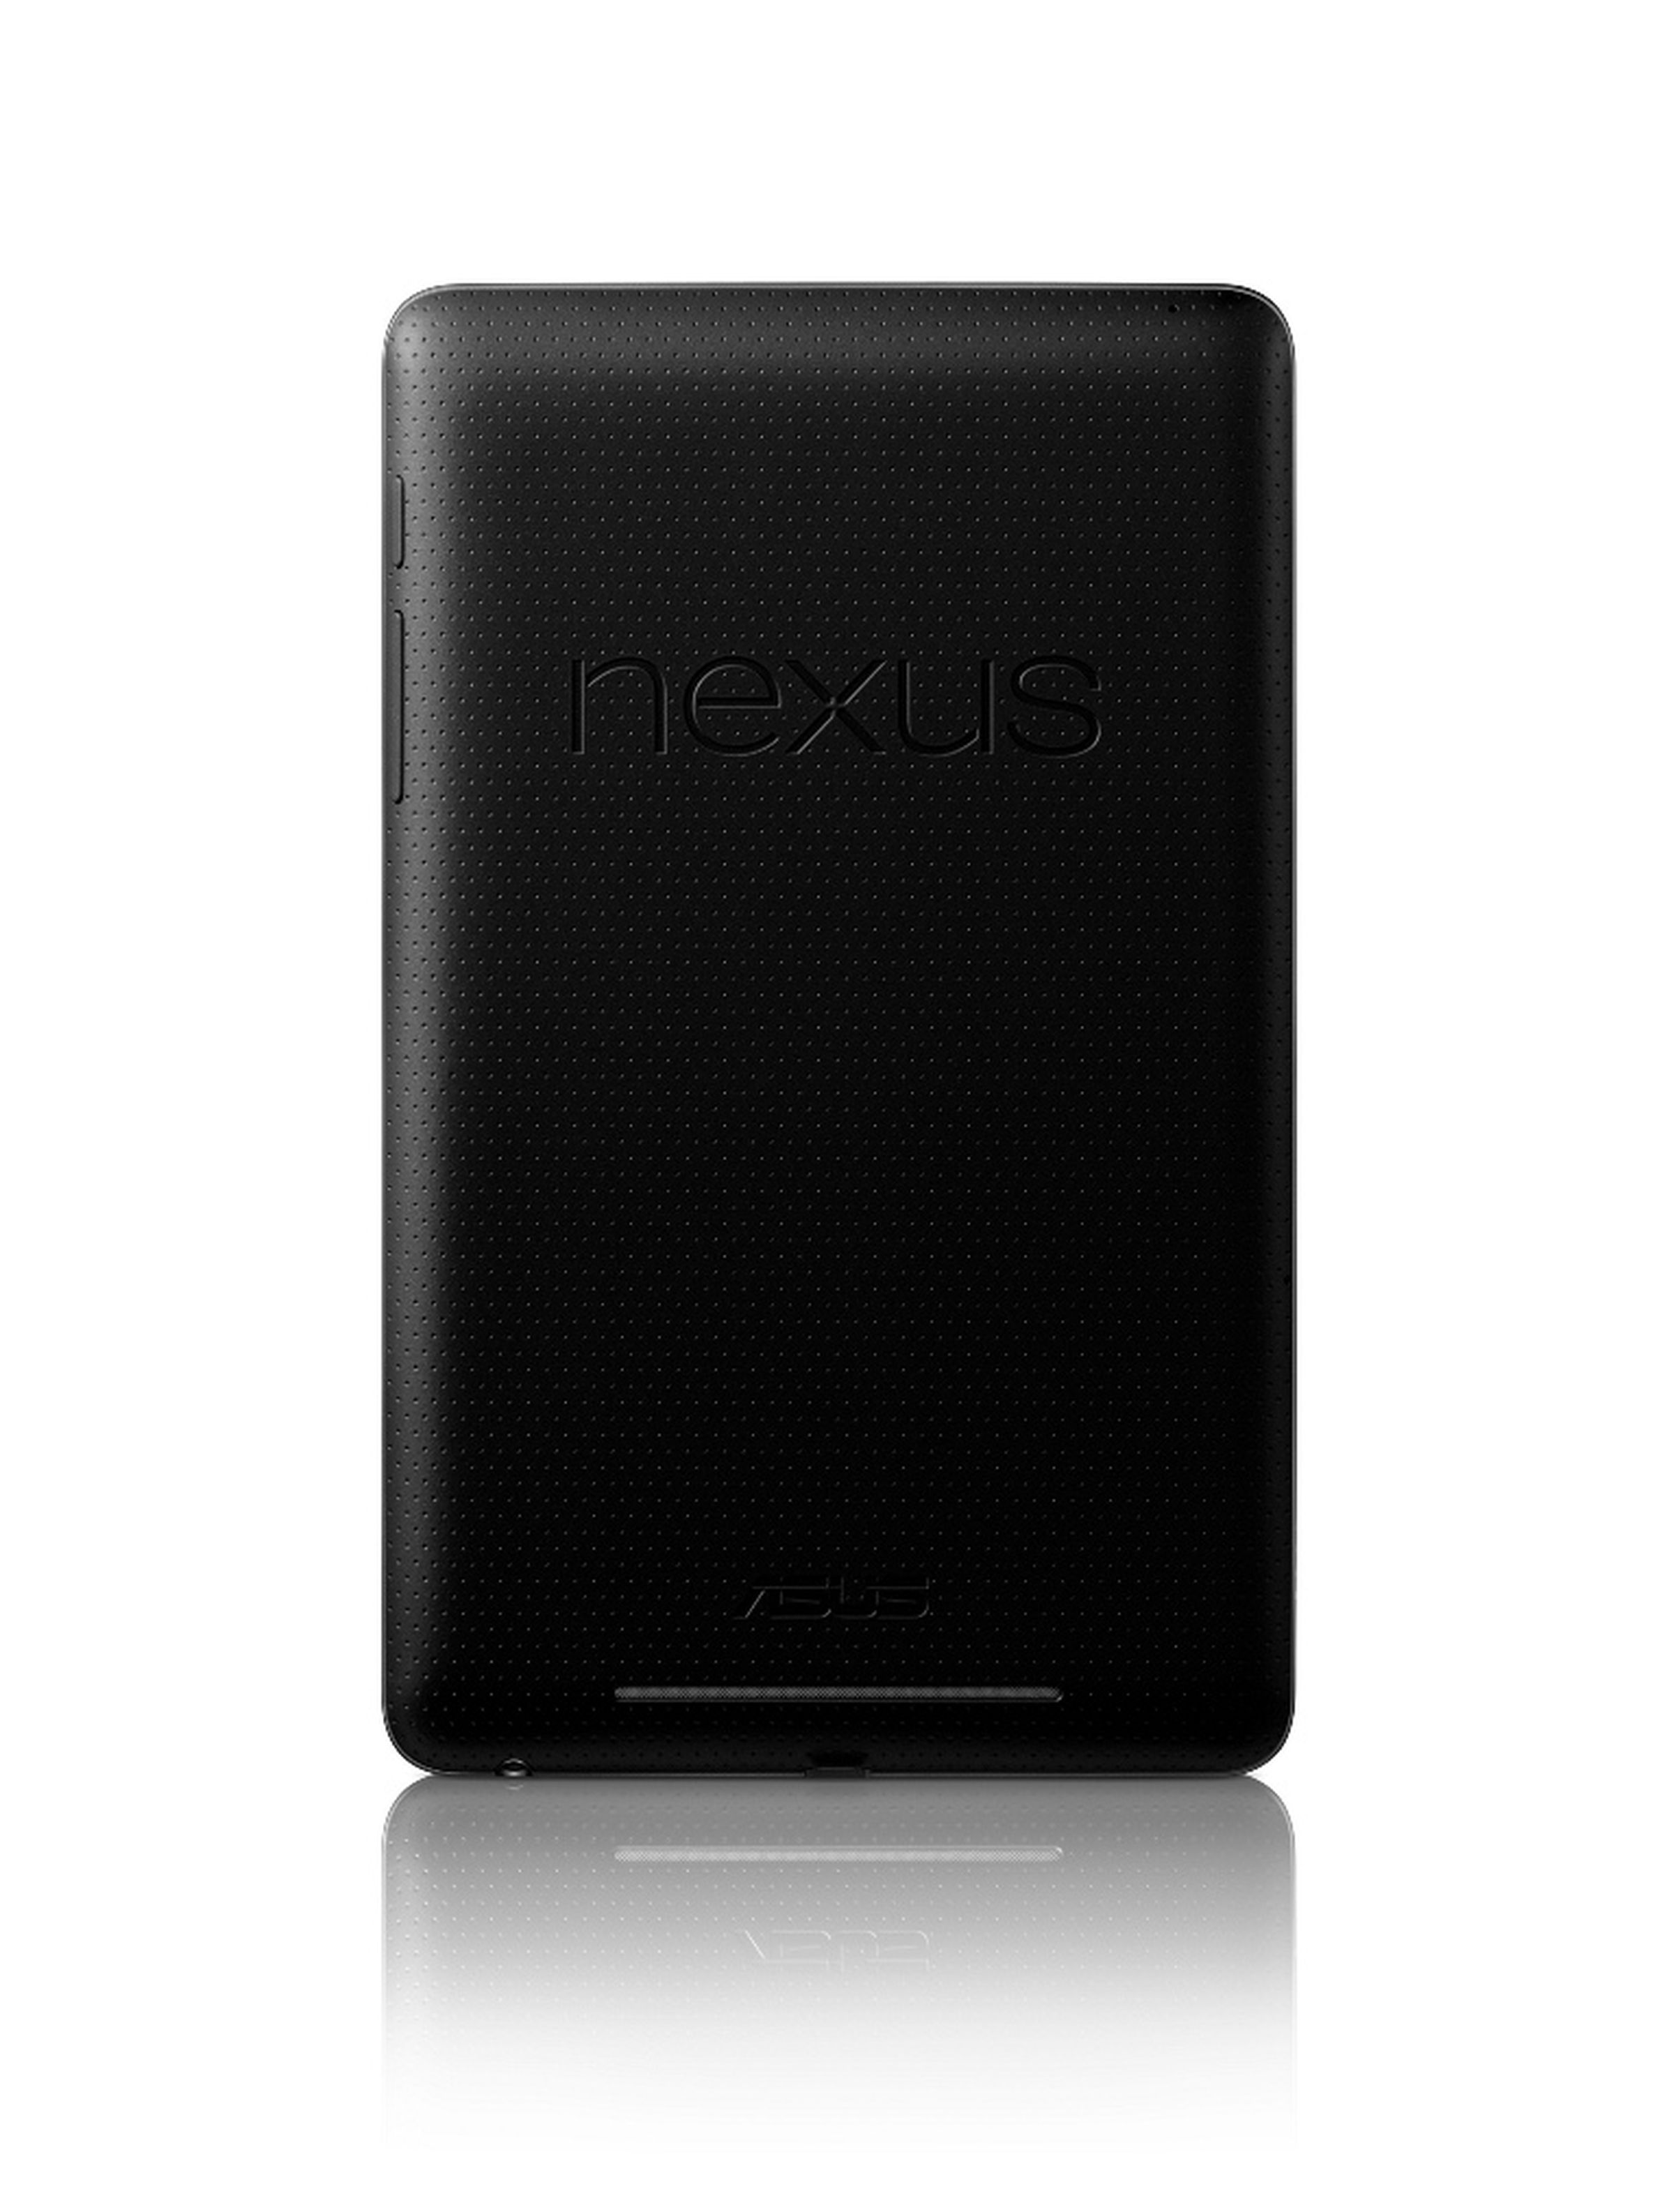 Asus Nexus 7 press photos